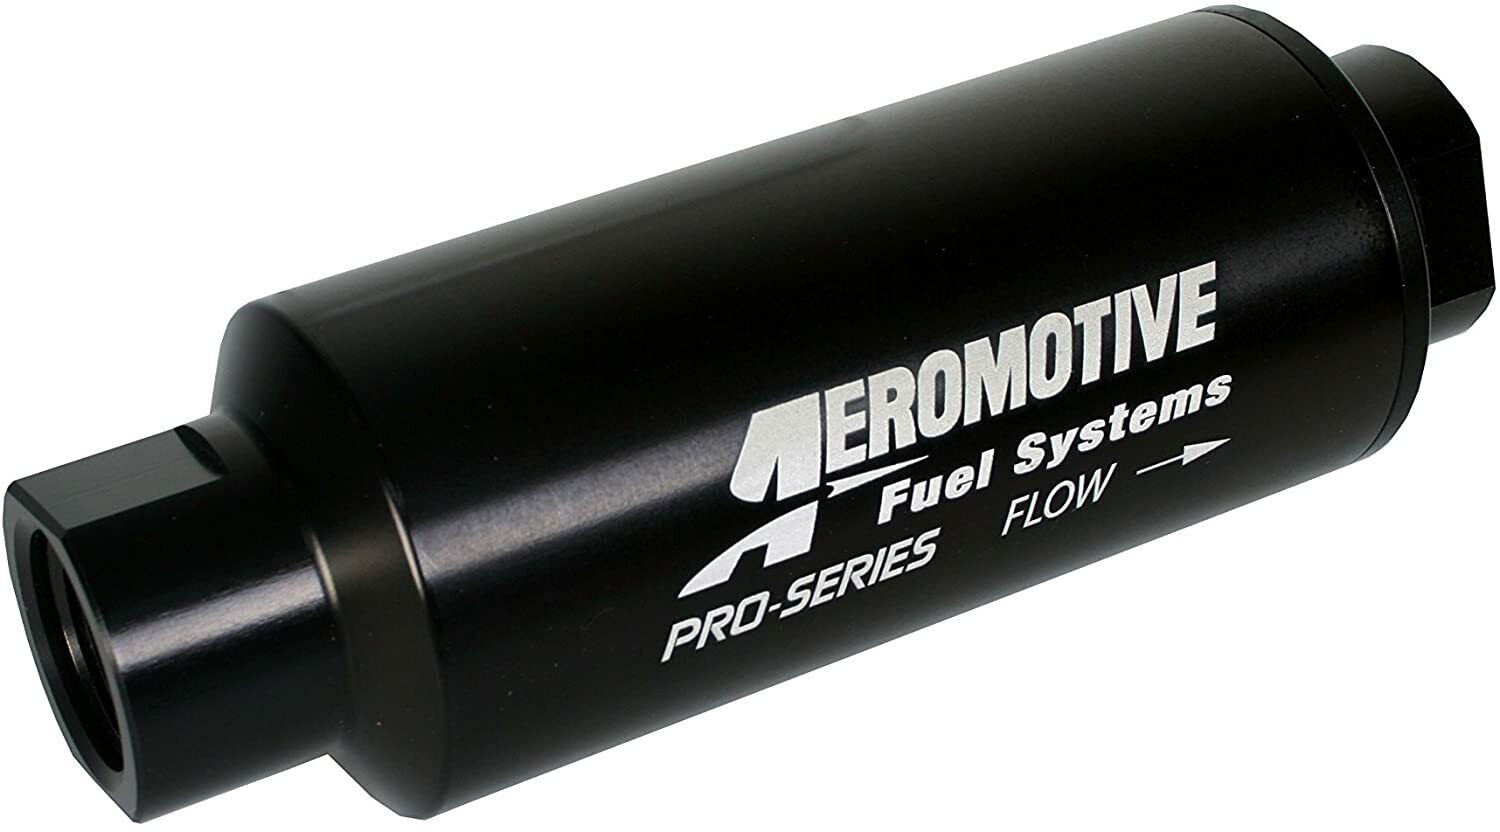 Aeromotive 12302 Filter, Pro-Series 100-Micron, orb-12